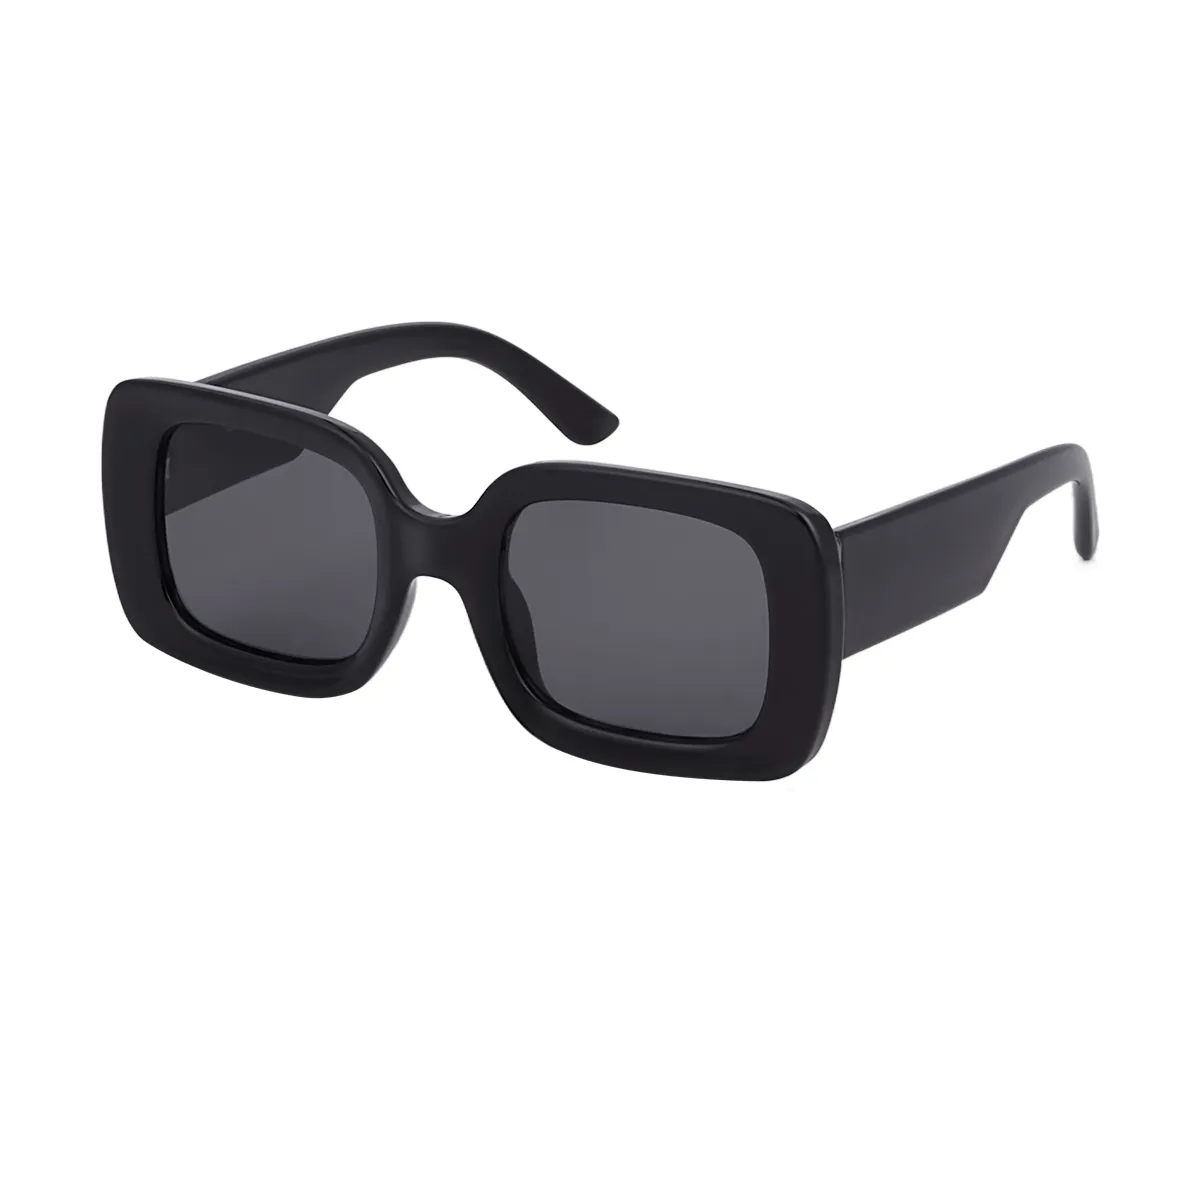 Anastasia - Square Black Sunglasses for Women